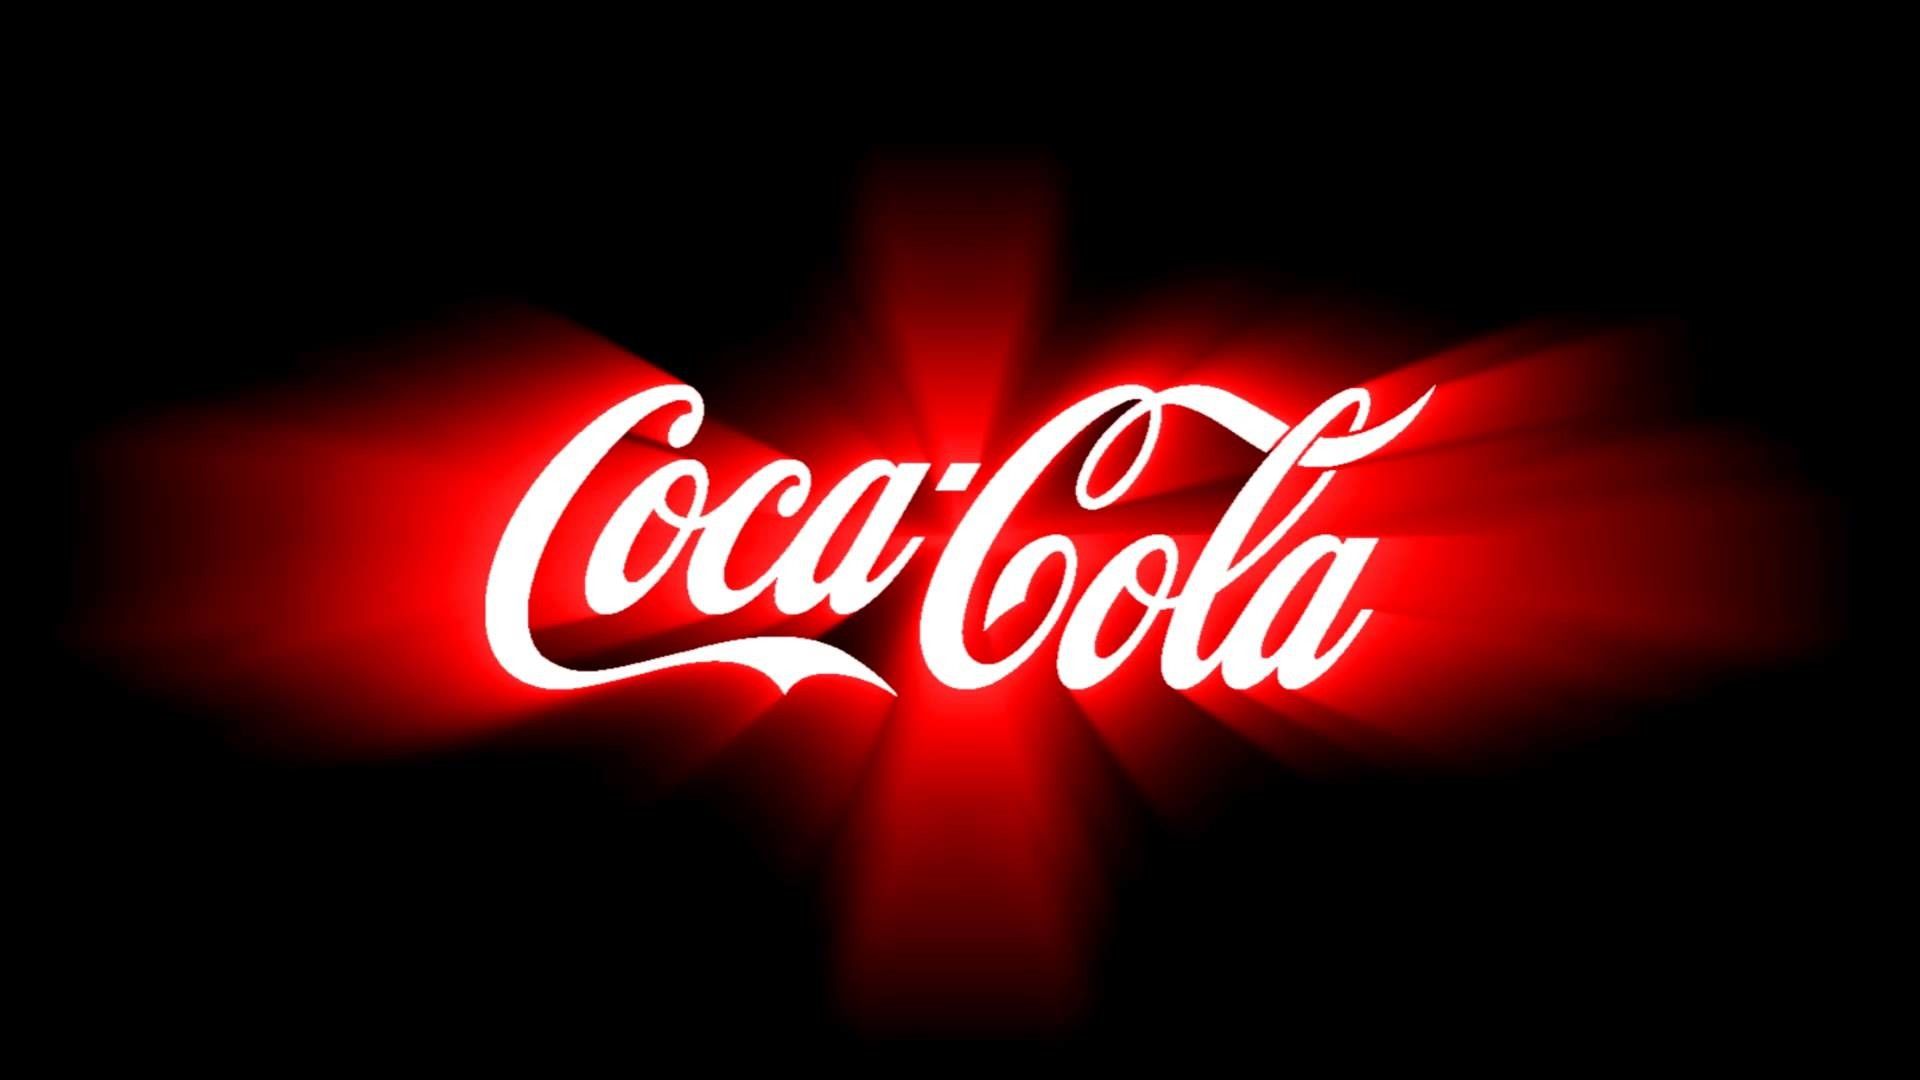 Fondos de pantalla de Coca Cola - FondosMil